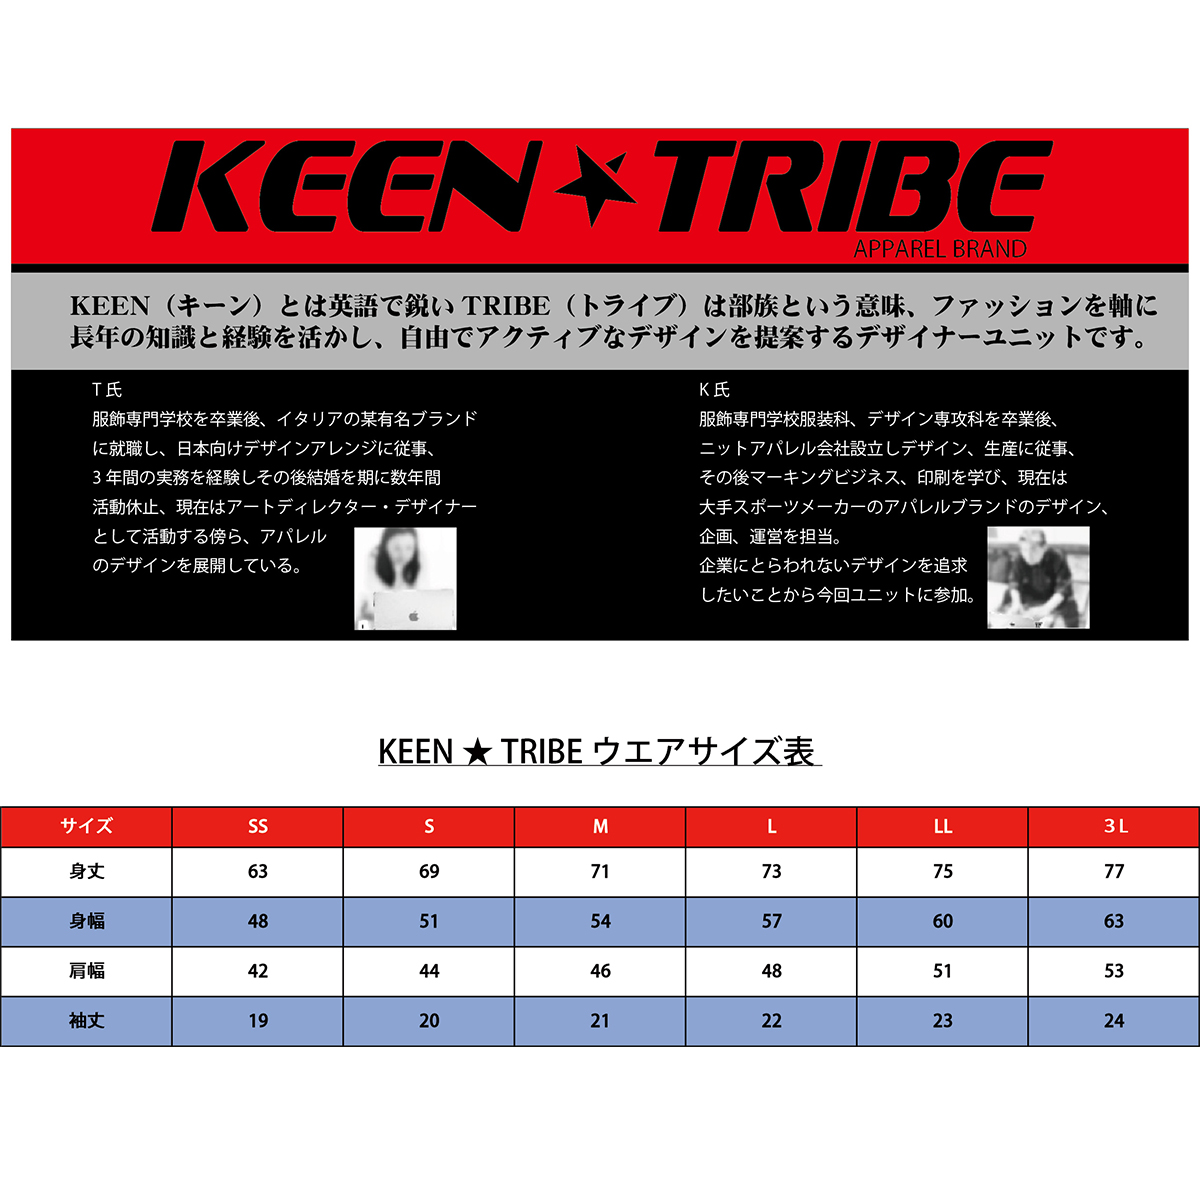 KEEN ★ TRIBE　KT-41(受注生産)【特別価格】